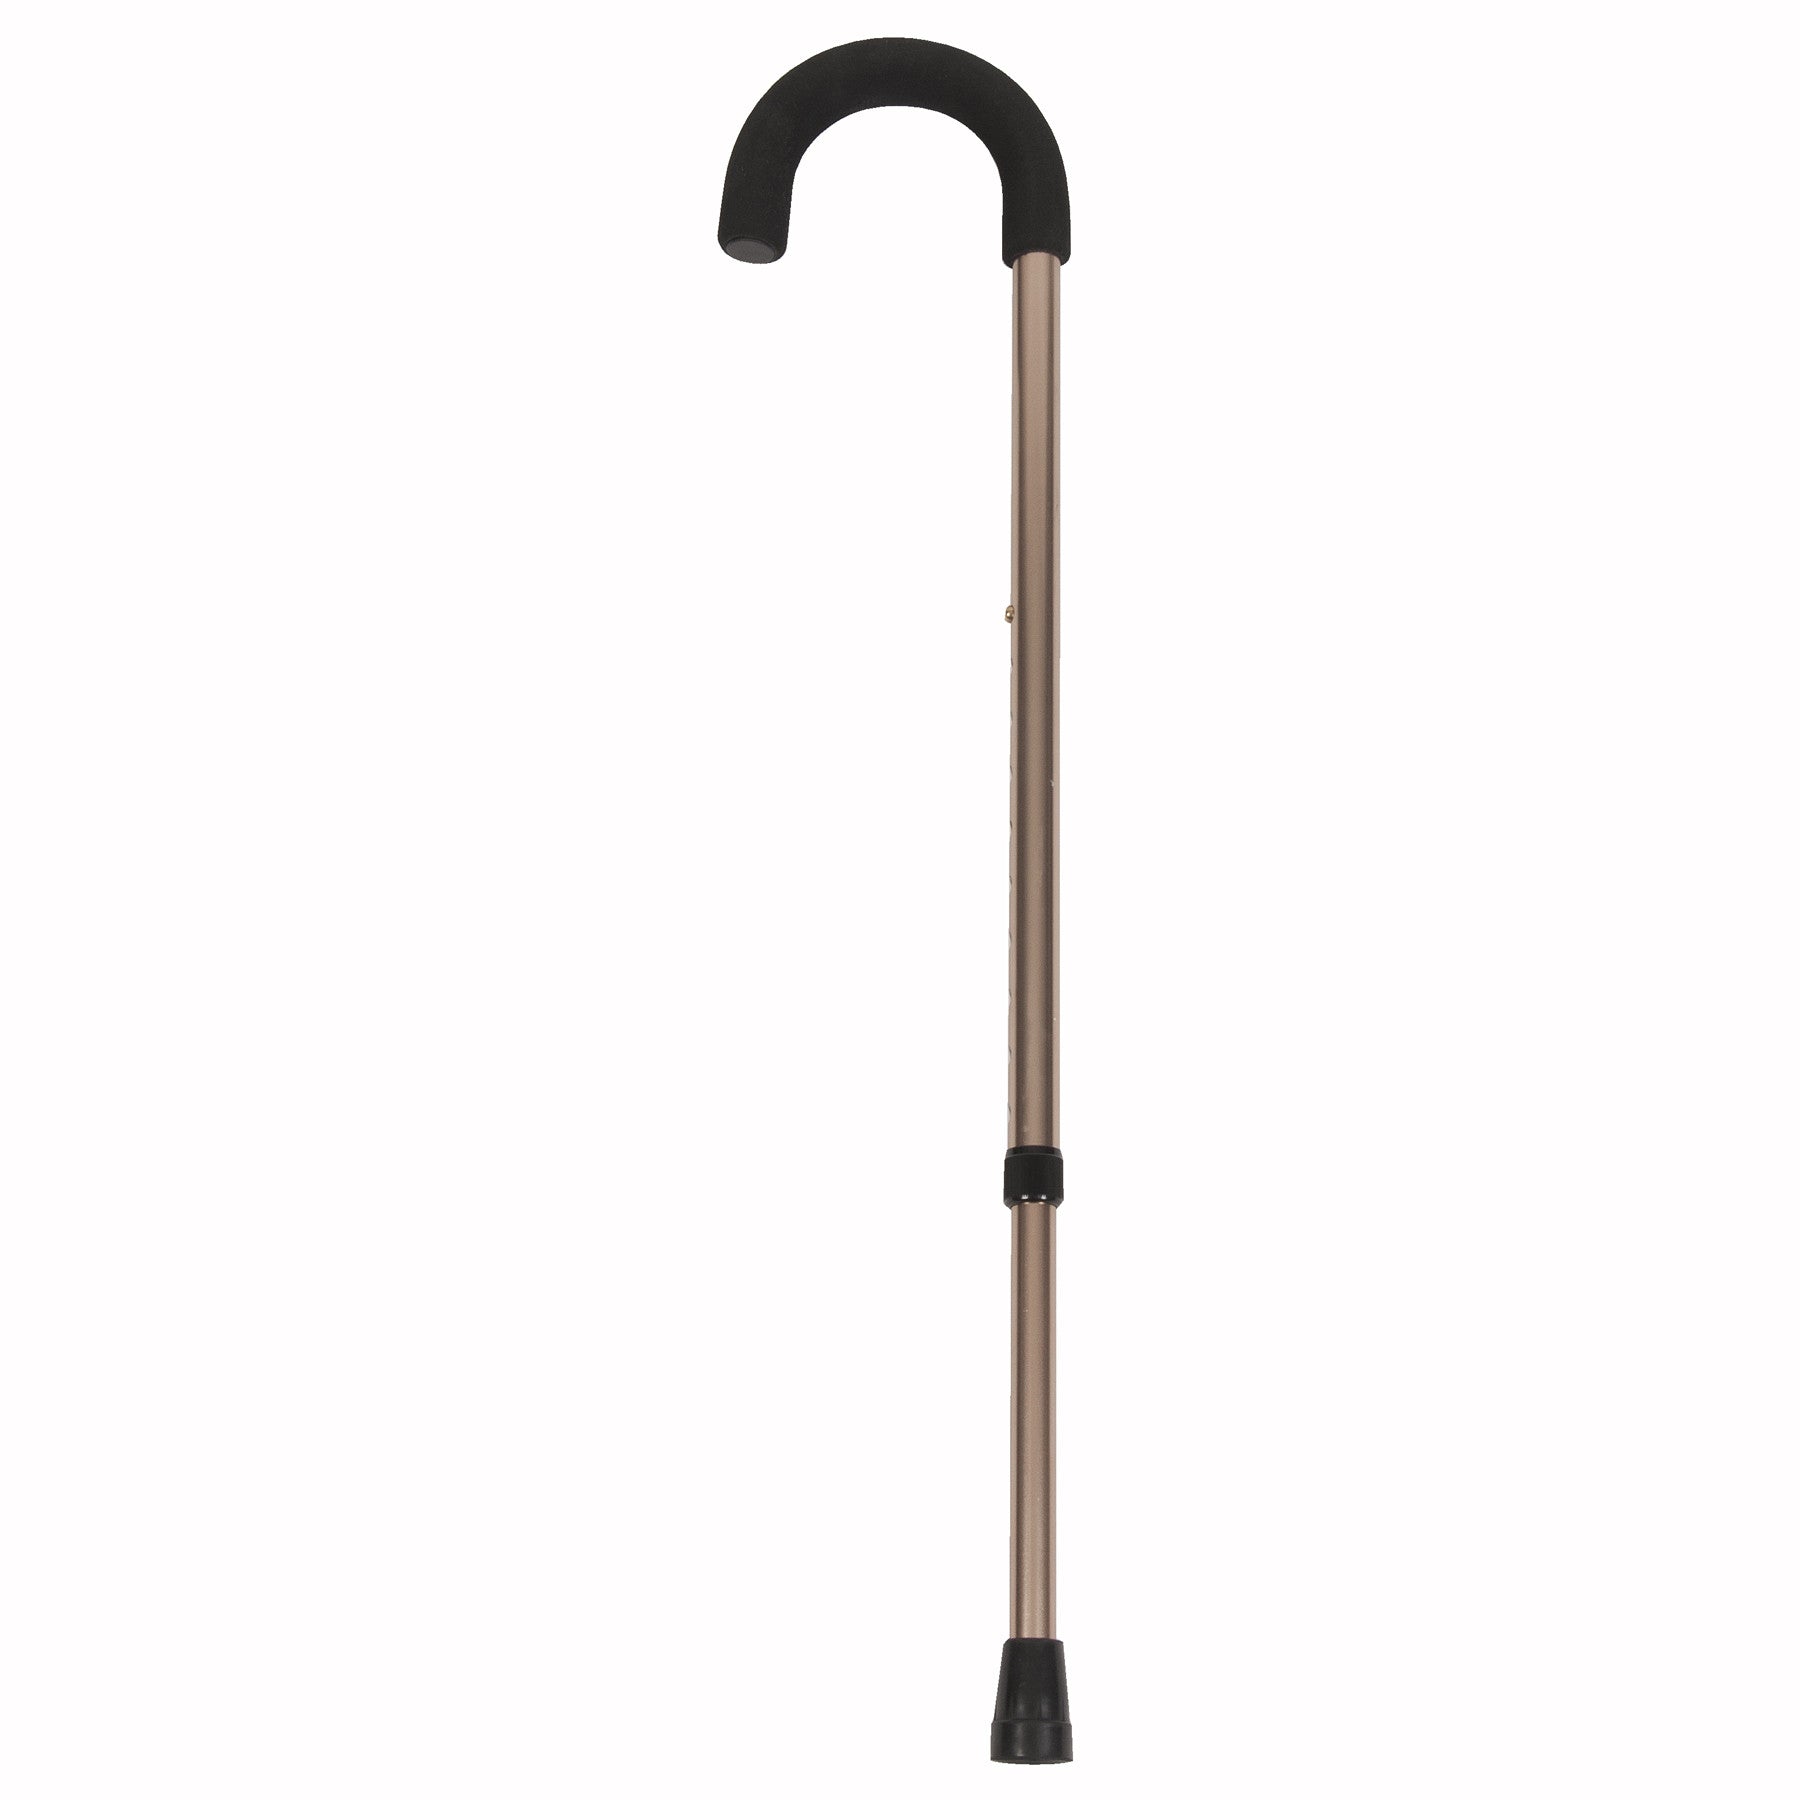 Curved handle adjustable aluminum cane, 6ea 